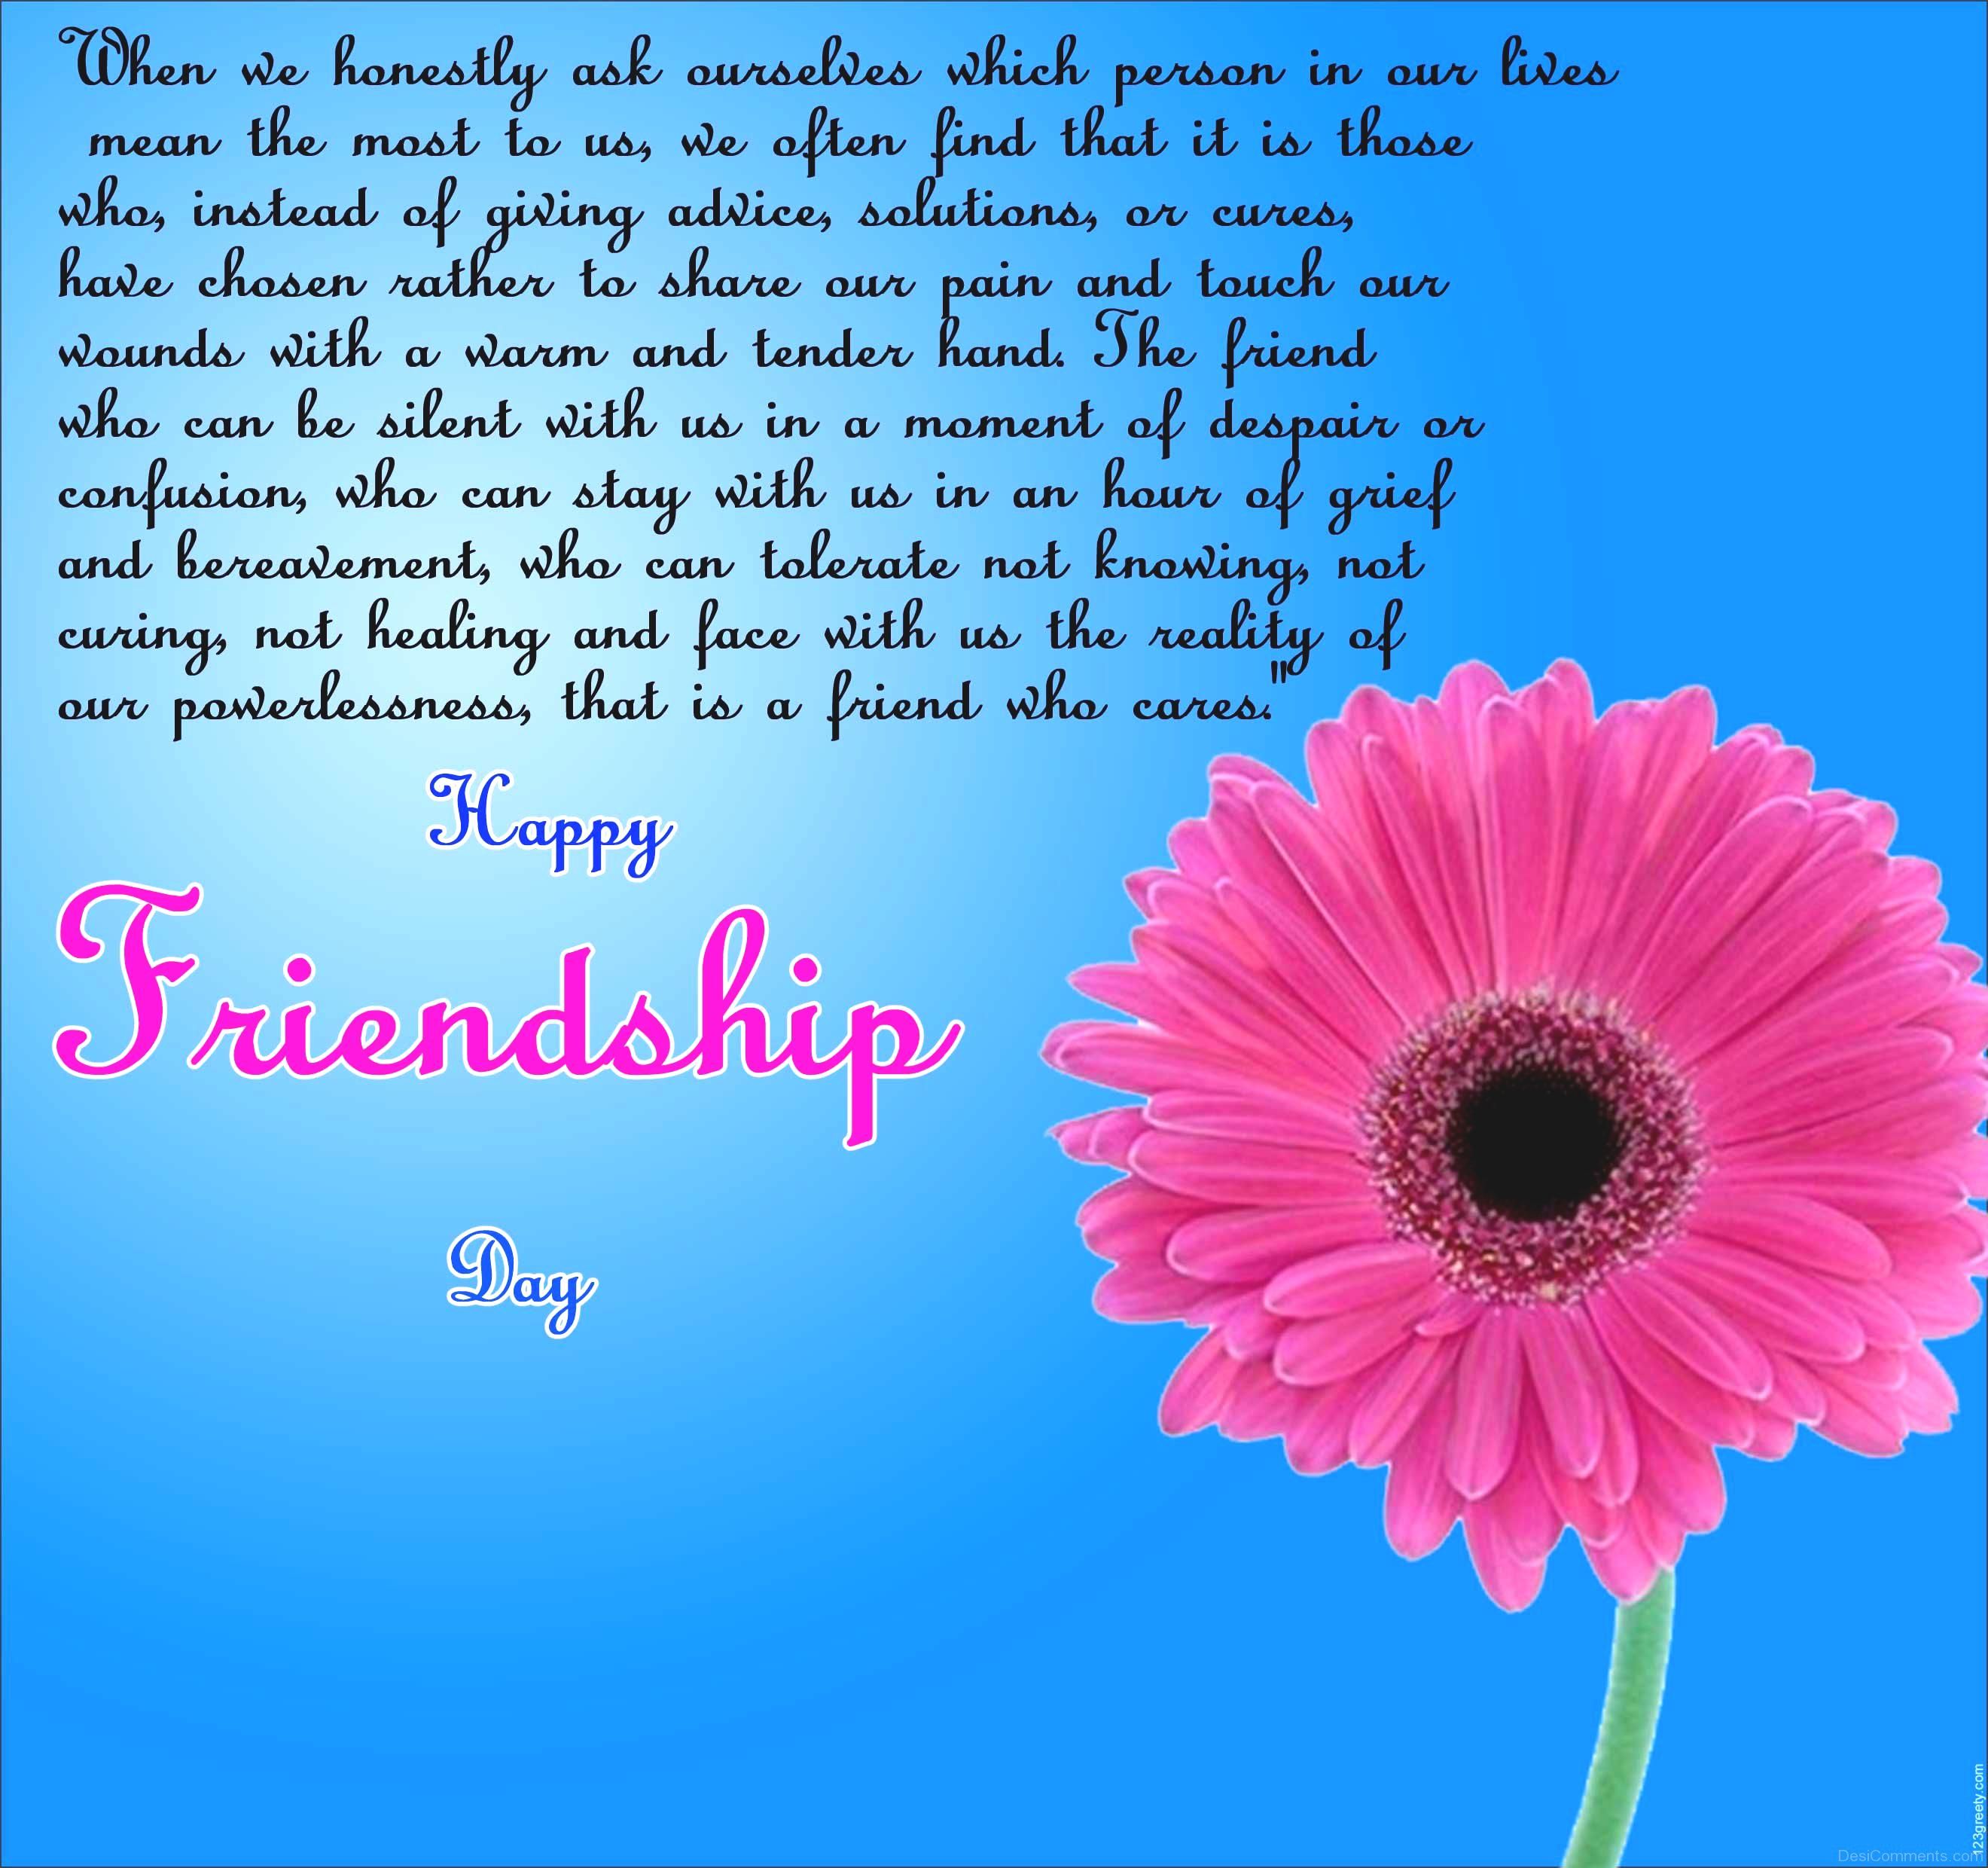 Friendship Day August 5 - HD Wallpaper 